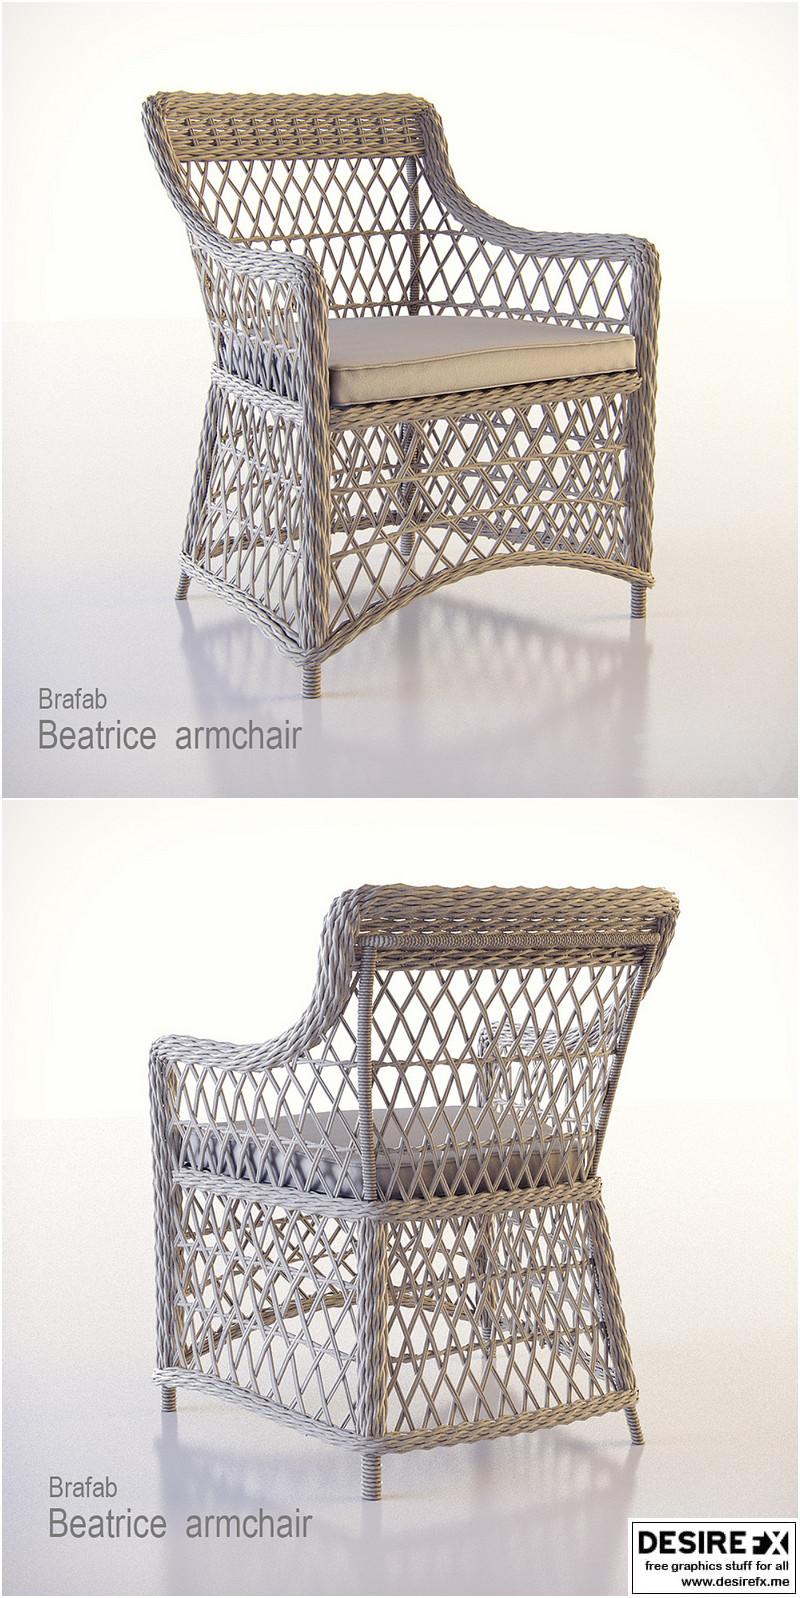 Desire FX 3d models | Beatrice armchair Brafab – 3D Model